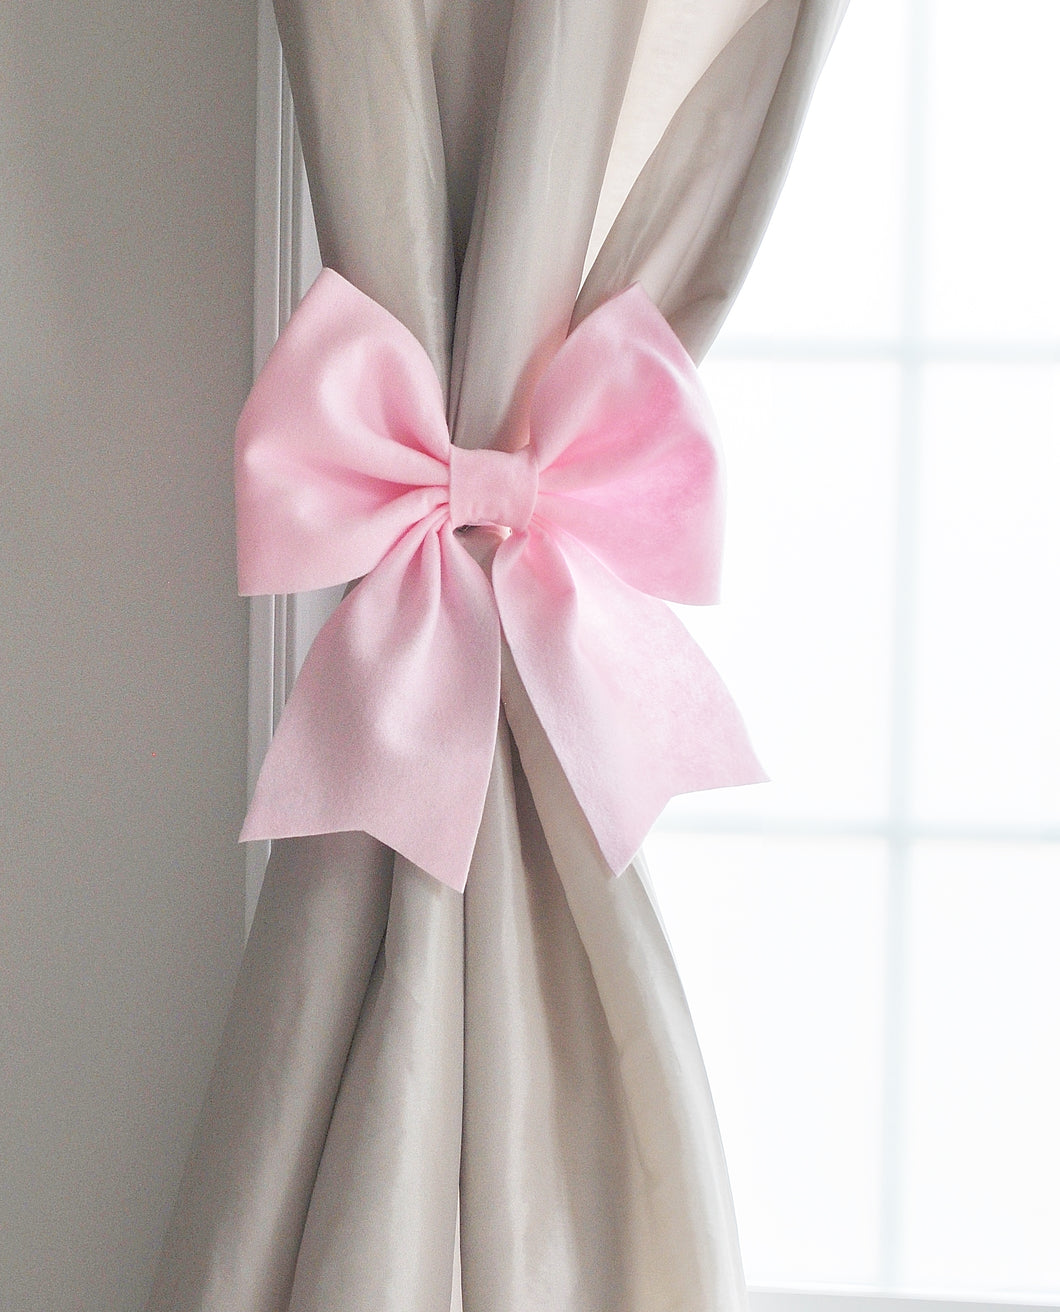 Light Pink Bow Curtain Tie Backs Nursery Curtain Holdbacks - Daisy Manor